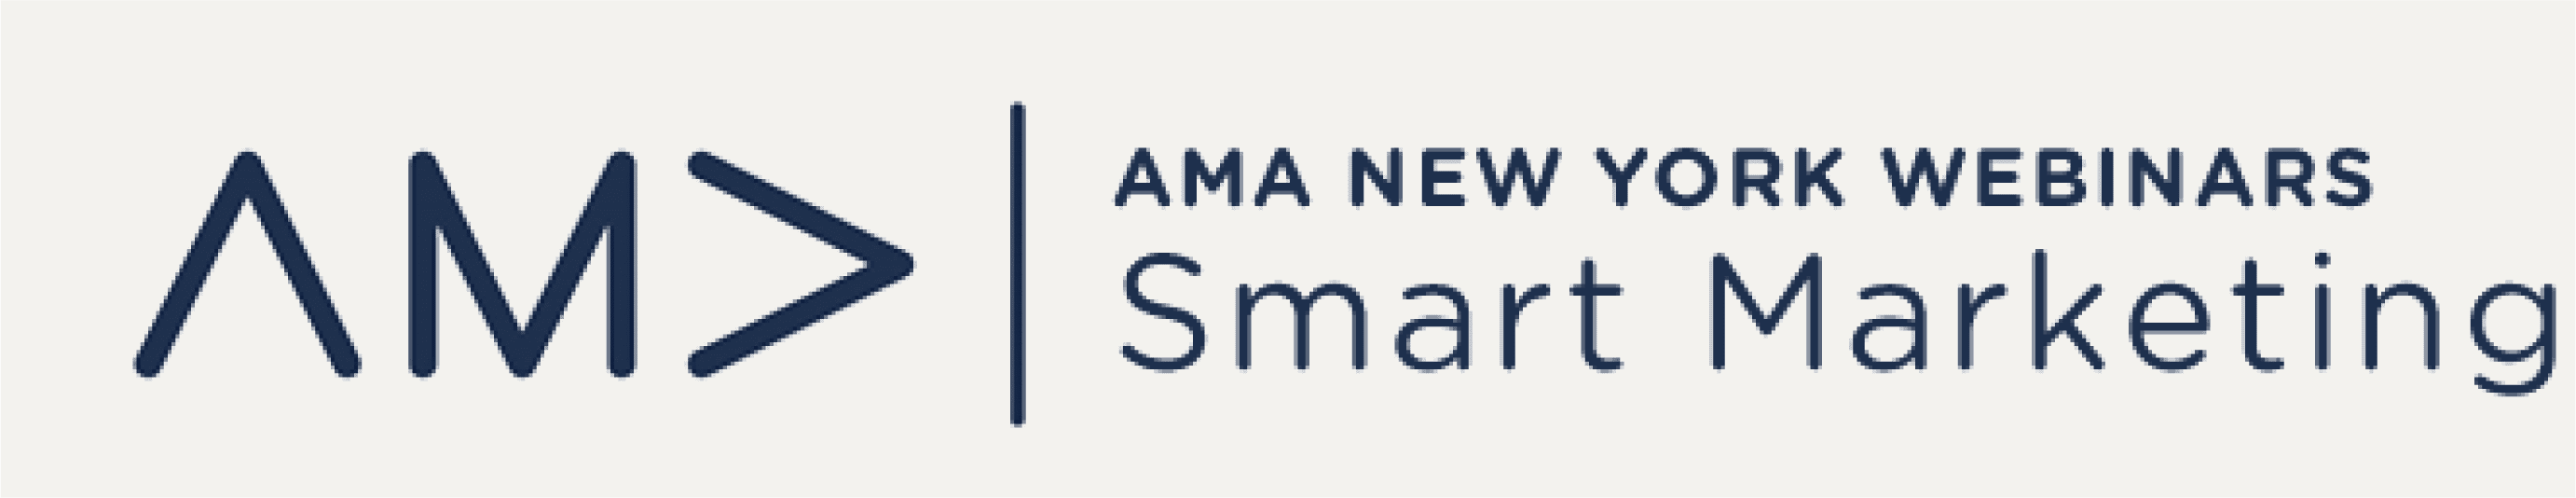 AMA New York Smart Marketing Webinar Series